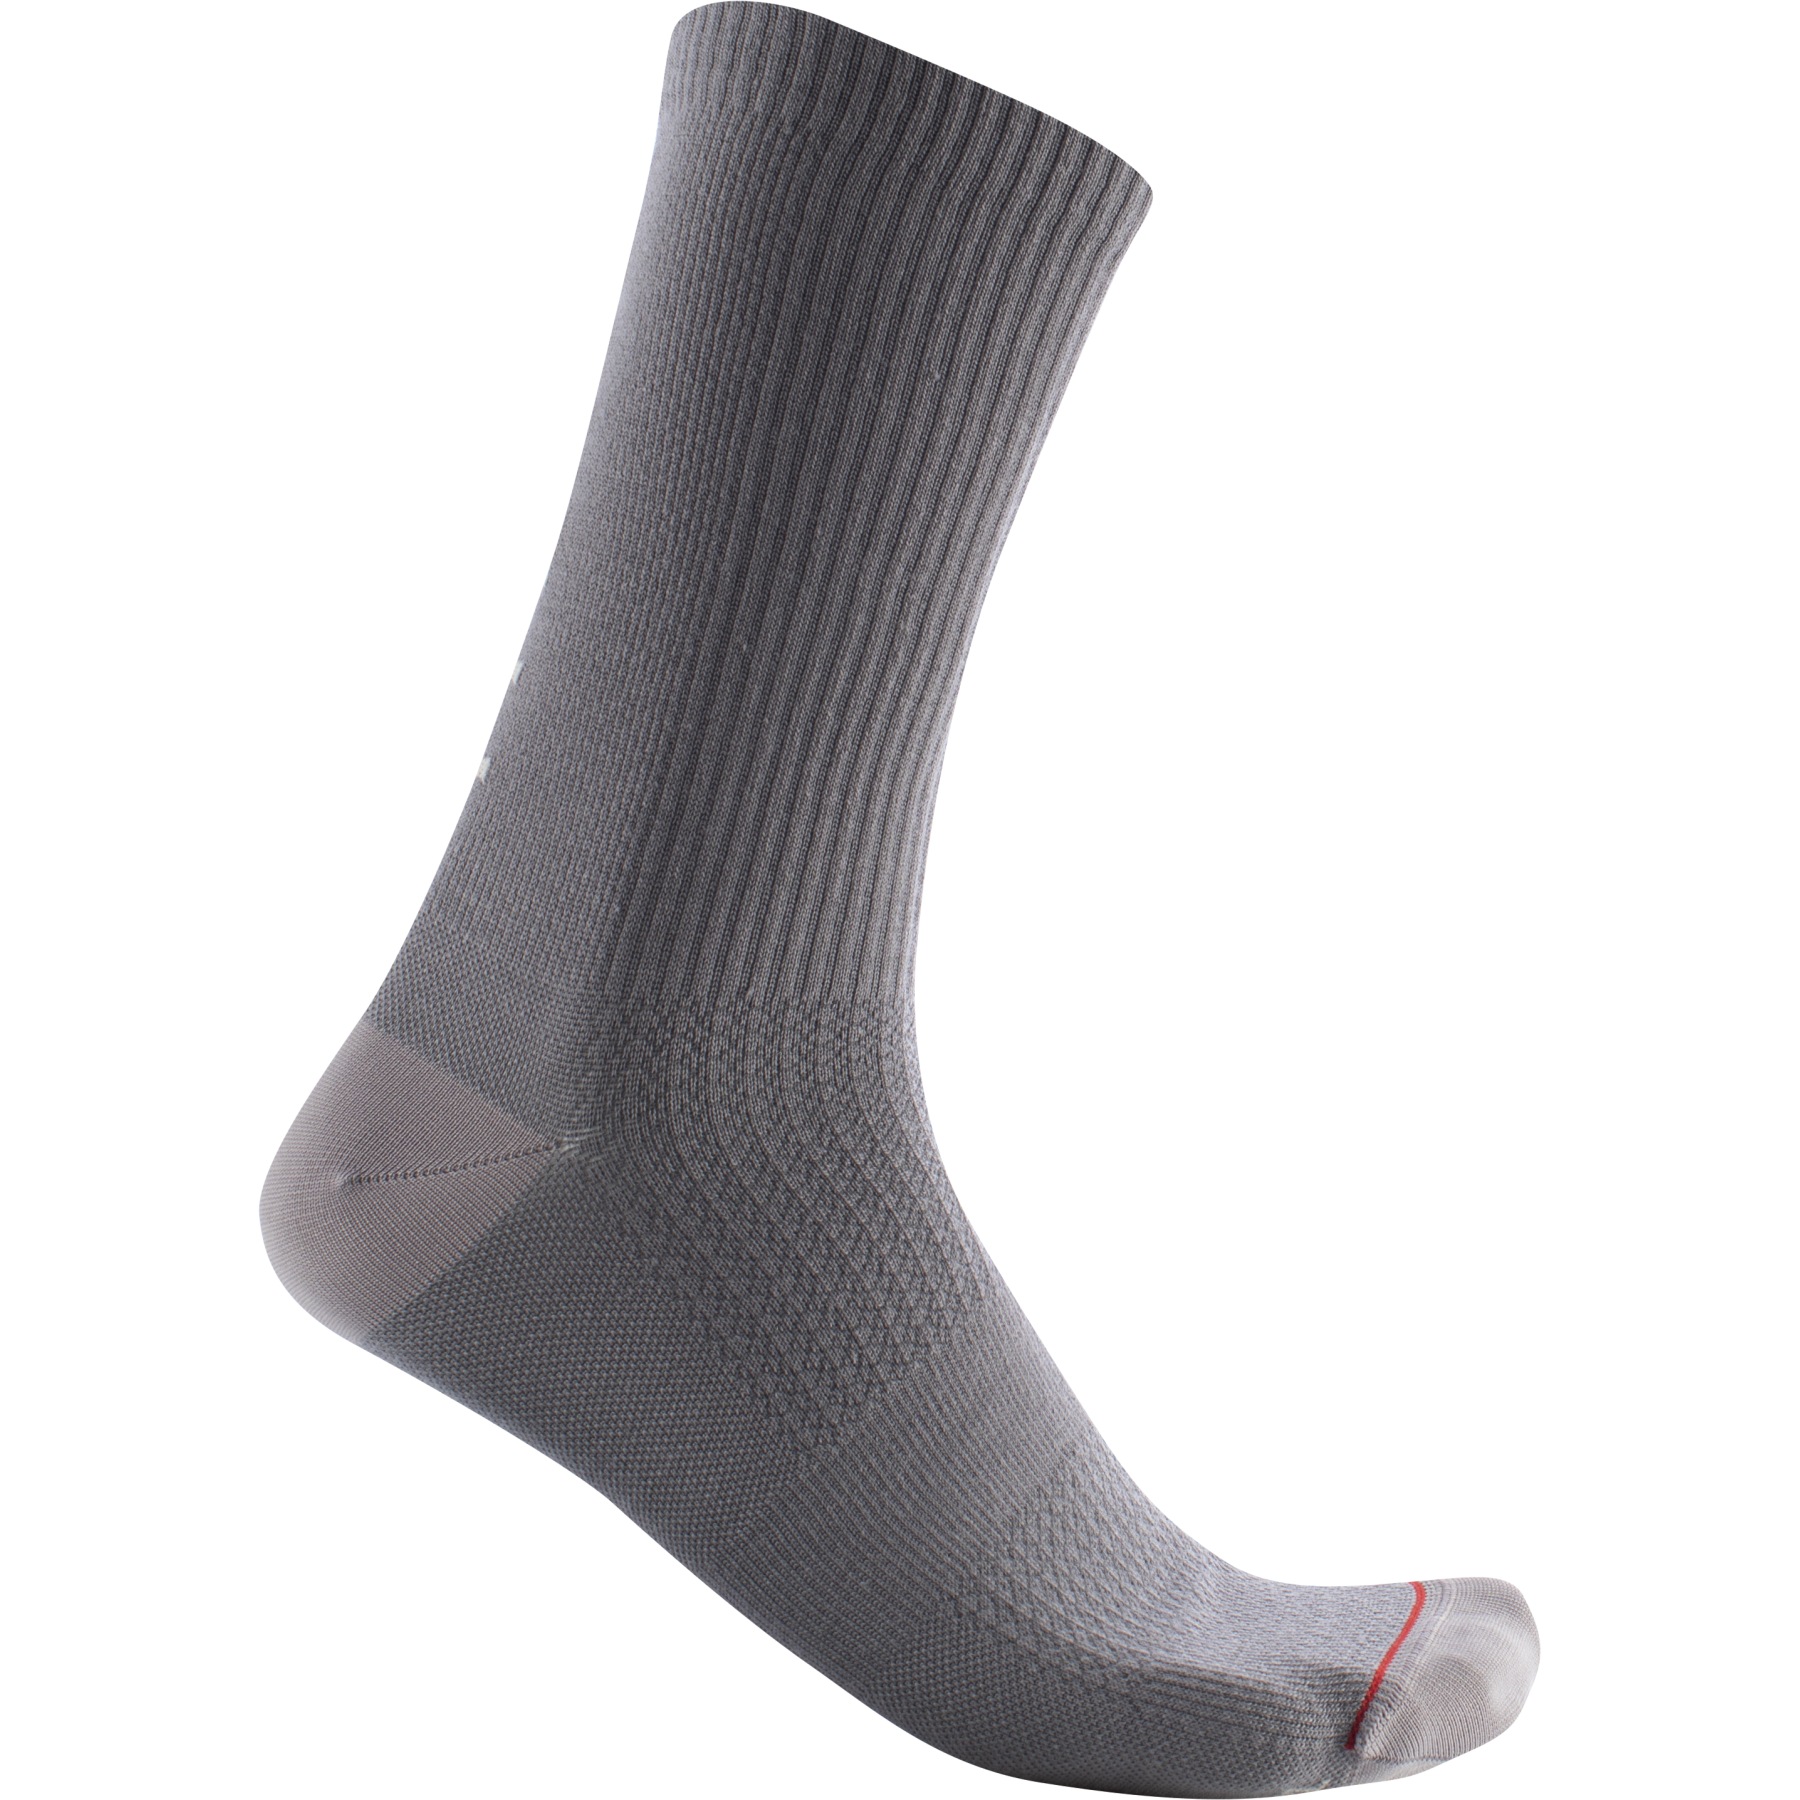 Image of Castelli Bandito Wool 18 Socks - nickel grey 064